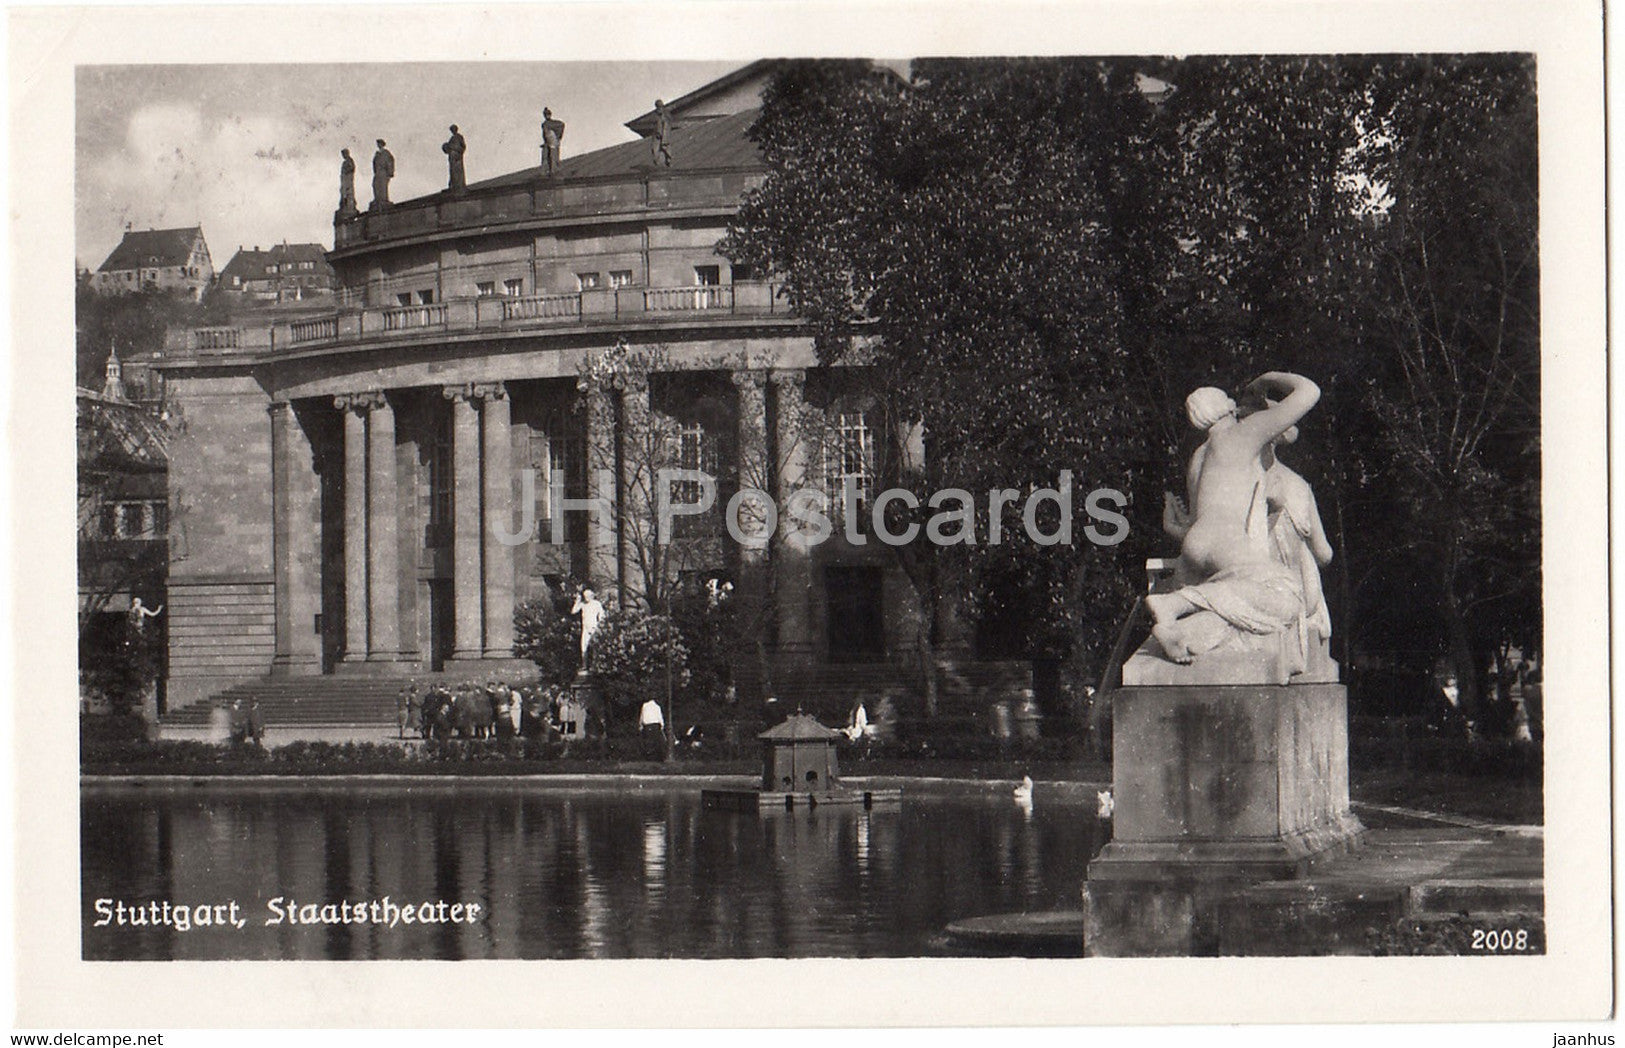 Stuttgart - Staatstheater - theatre - old postcard - 2008 - 1950 - Germany - used - JH Postcards